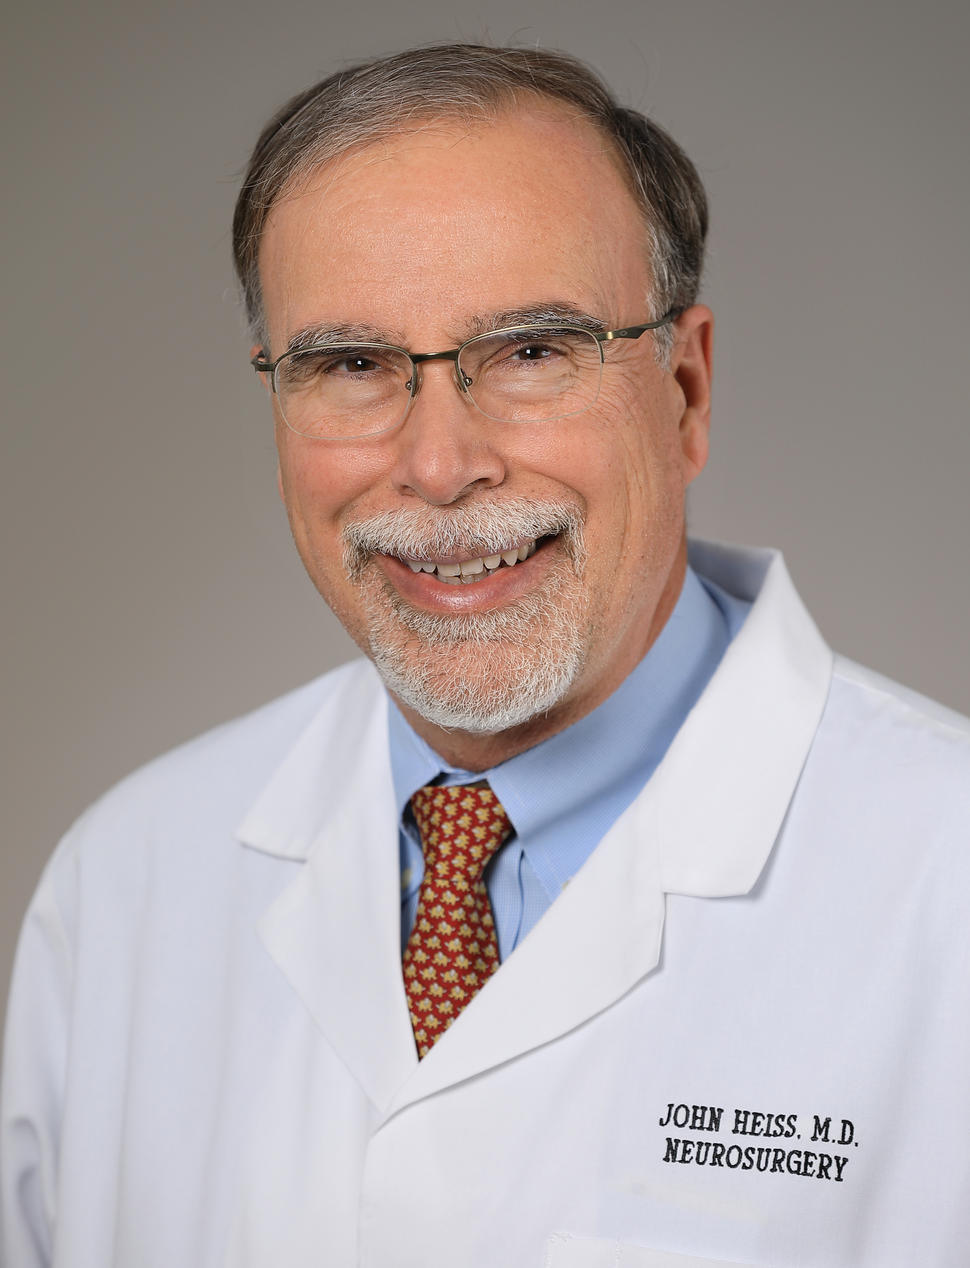 Dr. John Heiss